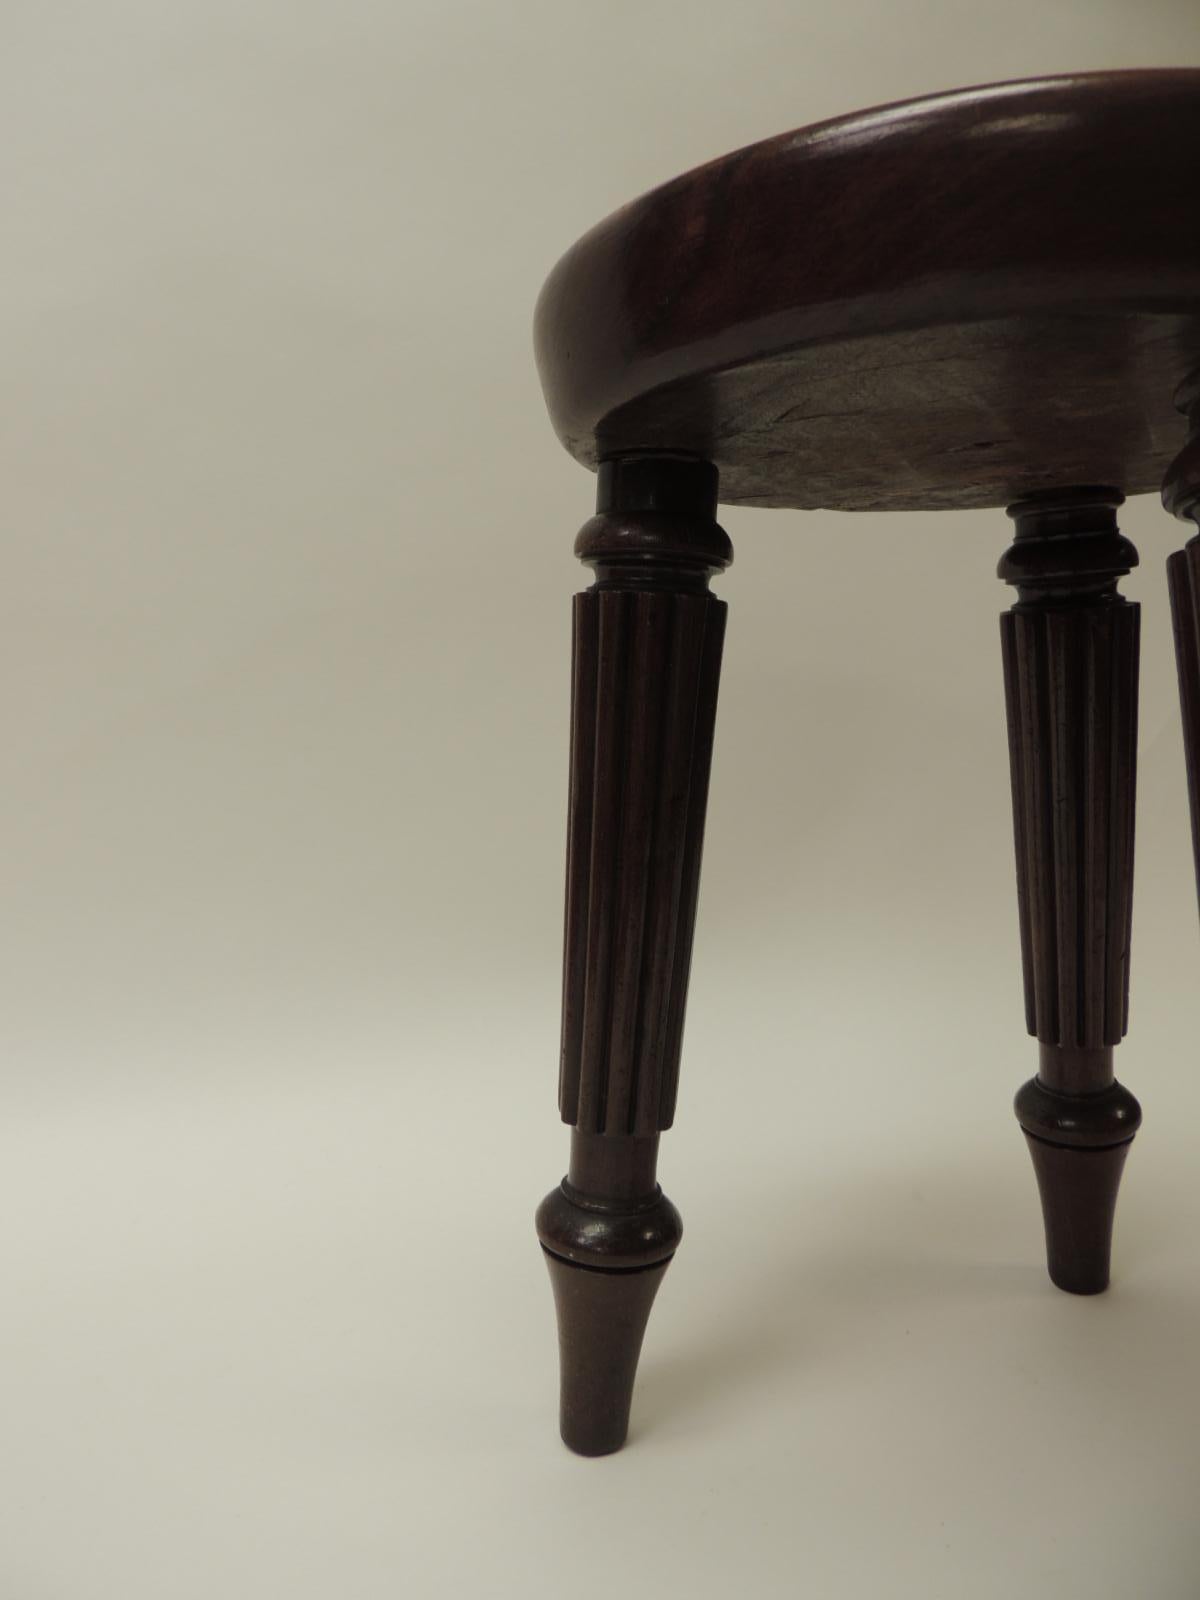 Hand-Crafted English Round Footstool